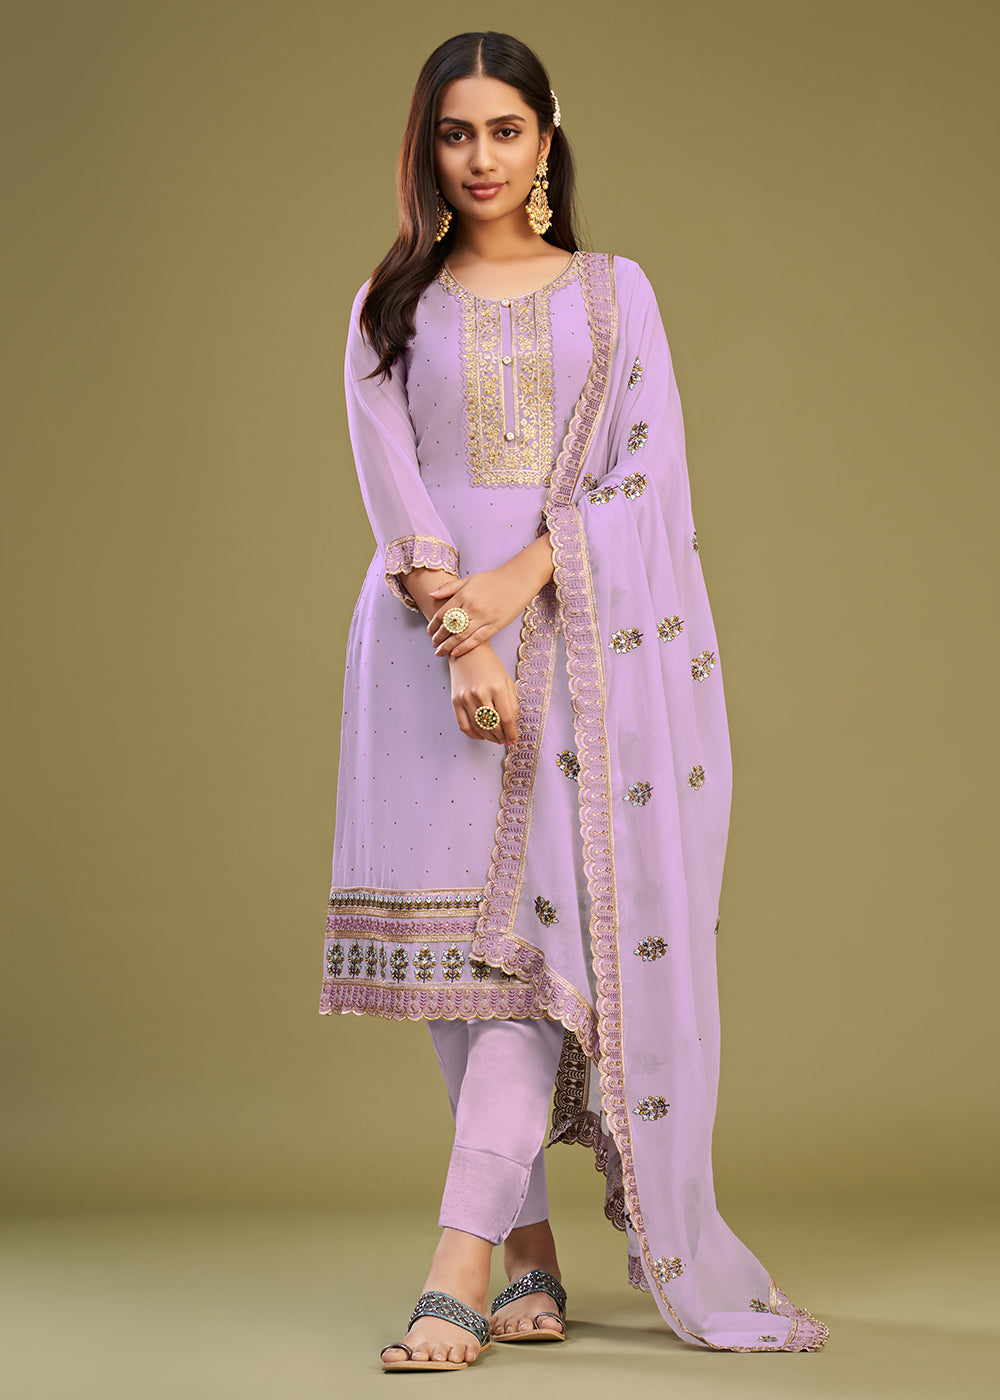 Buy Now Lavender Swarovski Work & Embroidered Eid Wear Salwar Suit Online in USA, UK, Canada, Germany, Australia & Worldwide at Empress Clothing.